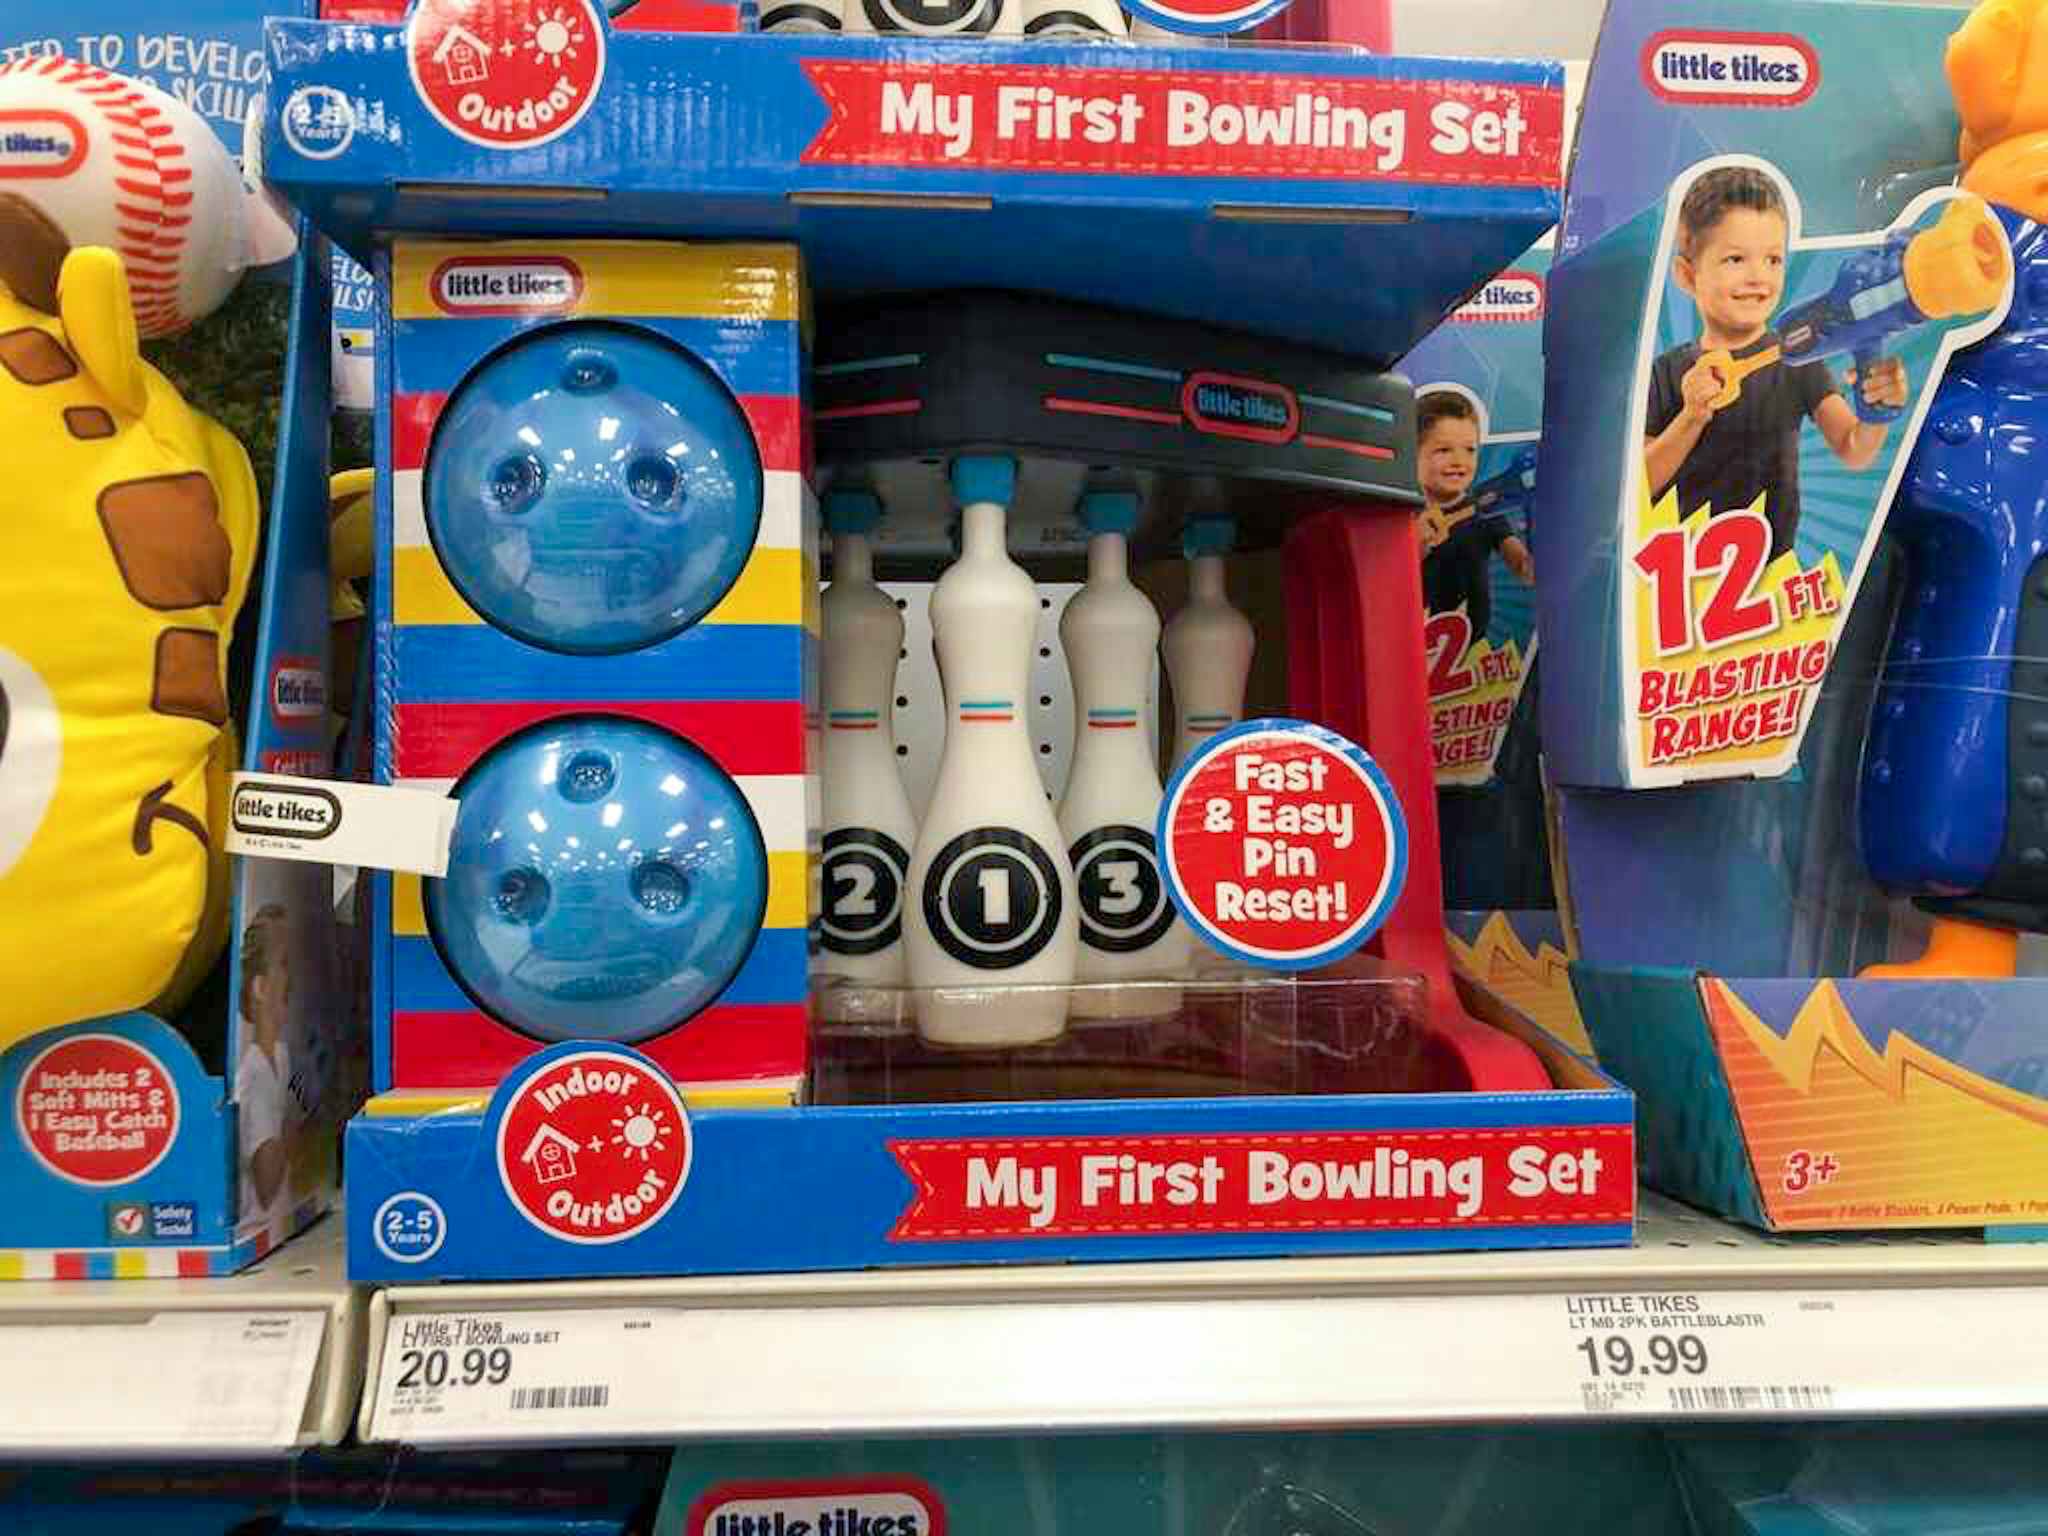 little tikes my first bowling set on a target shelf